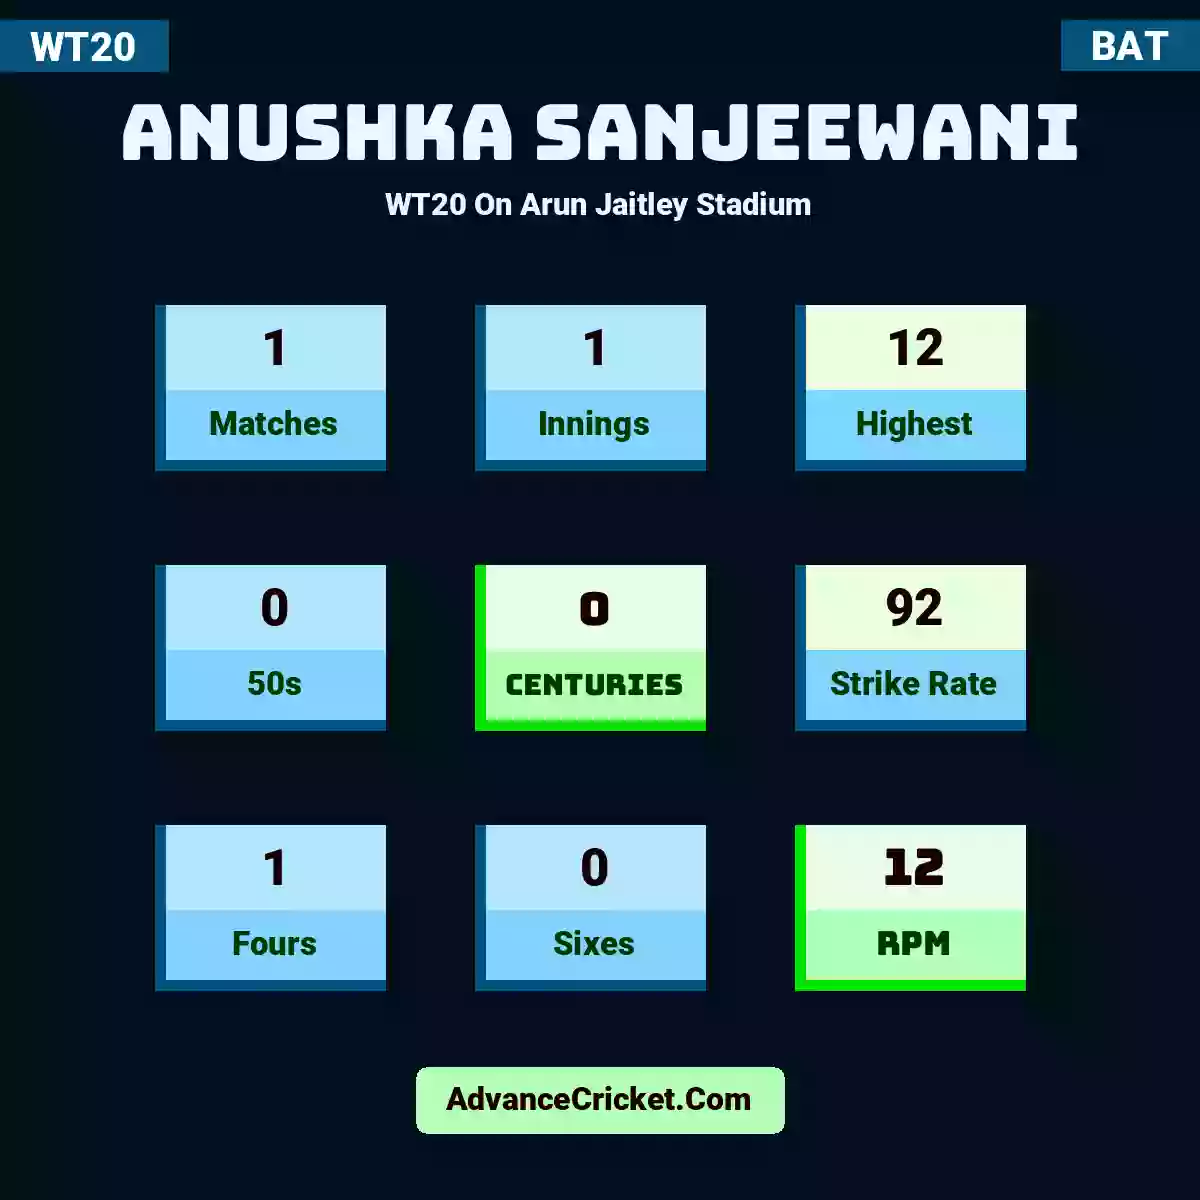 Anushka Sanjeewani WT20  On Arun Jaitley Stadium, Anushka Sanjeewani played 1 matches, scored 12 runs as highest, 0 half-centuries, and 0 centuries, with a strike rate of 92. A.Sanjeewani hit 1 fours and 0 sixes, with an RPM of 12.